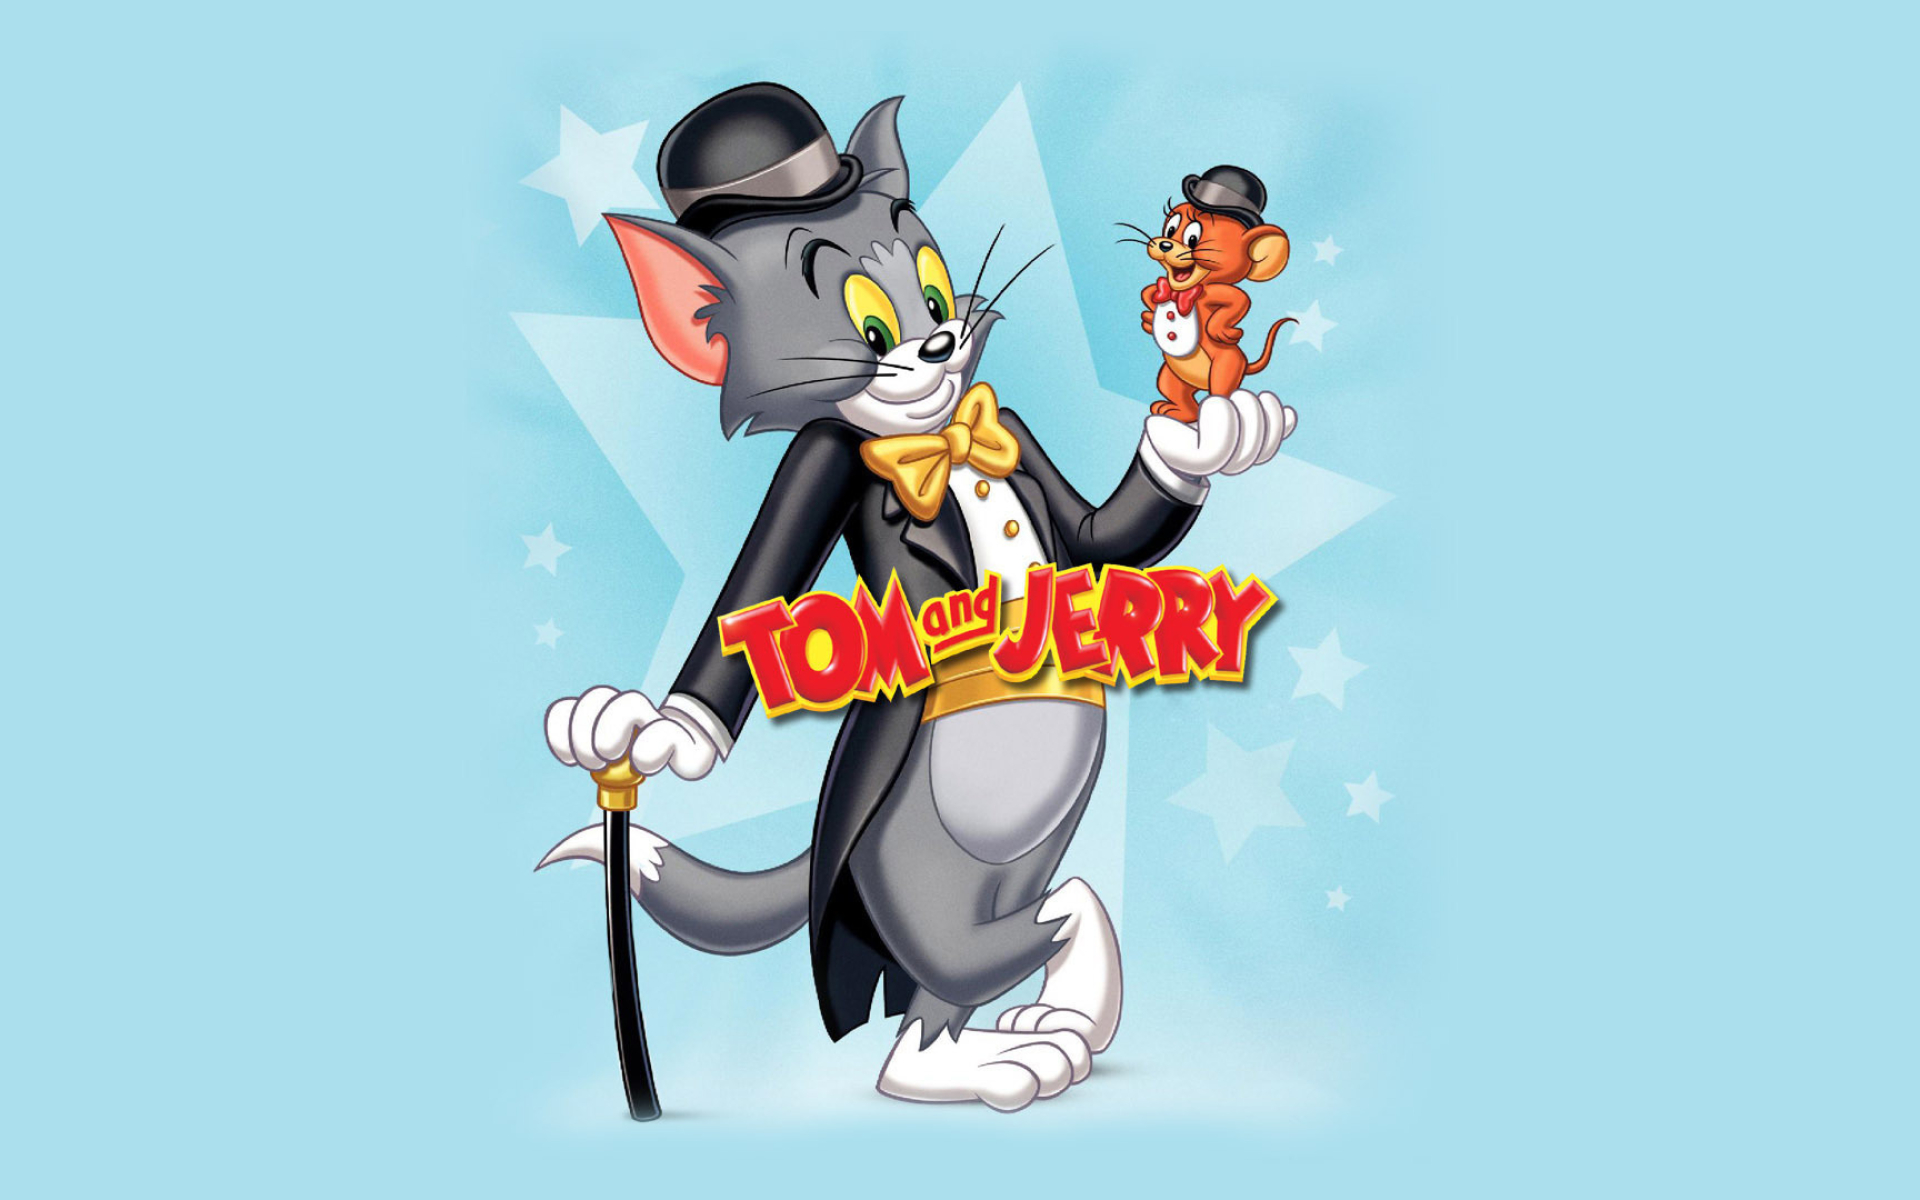 Tom and Jerry 4 wallpaper, Cartoon favorites, Quirky humor, Nostalgic charm, 1920x1200 HD Desktop